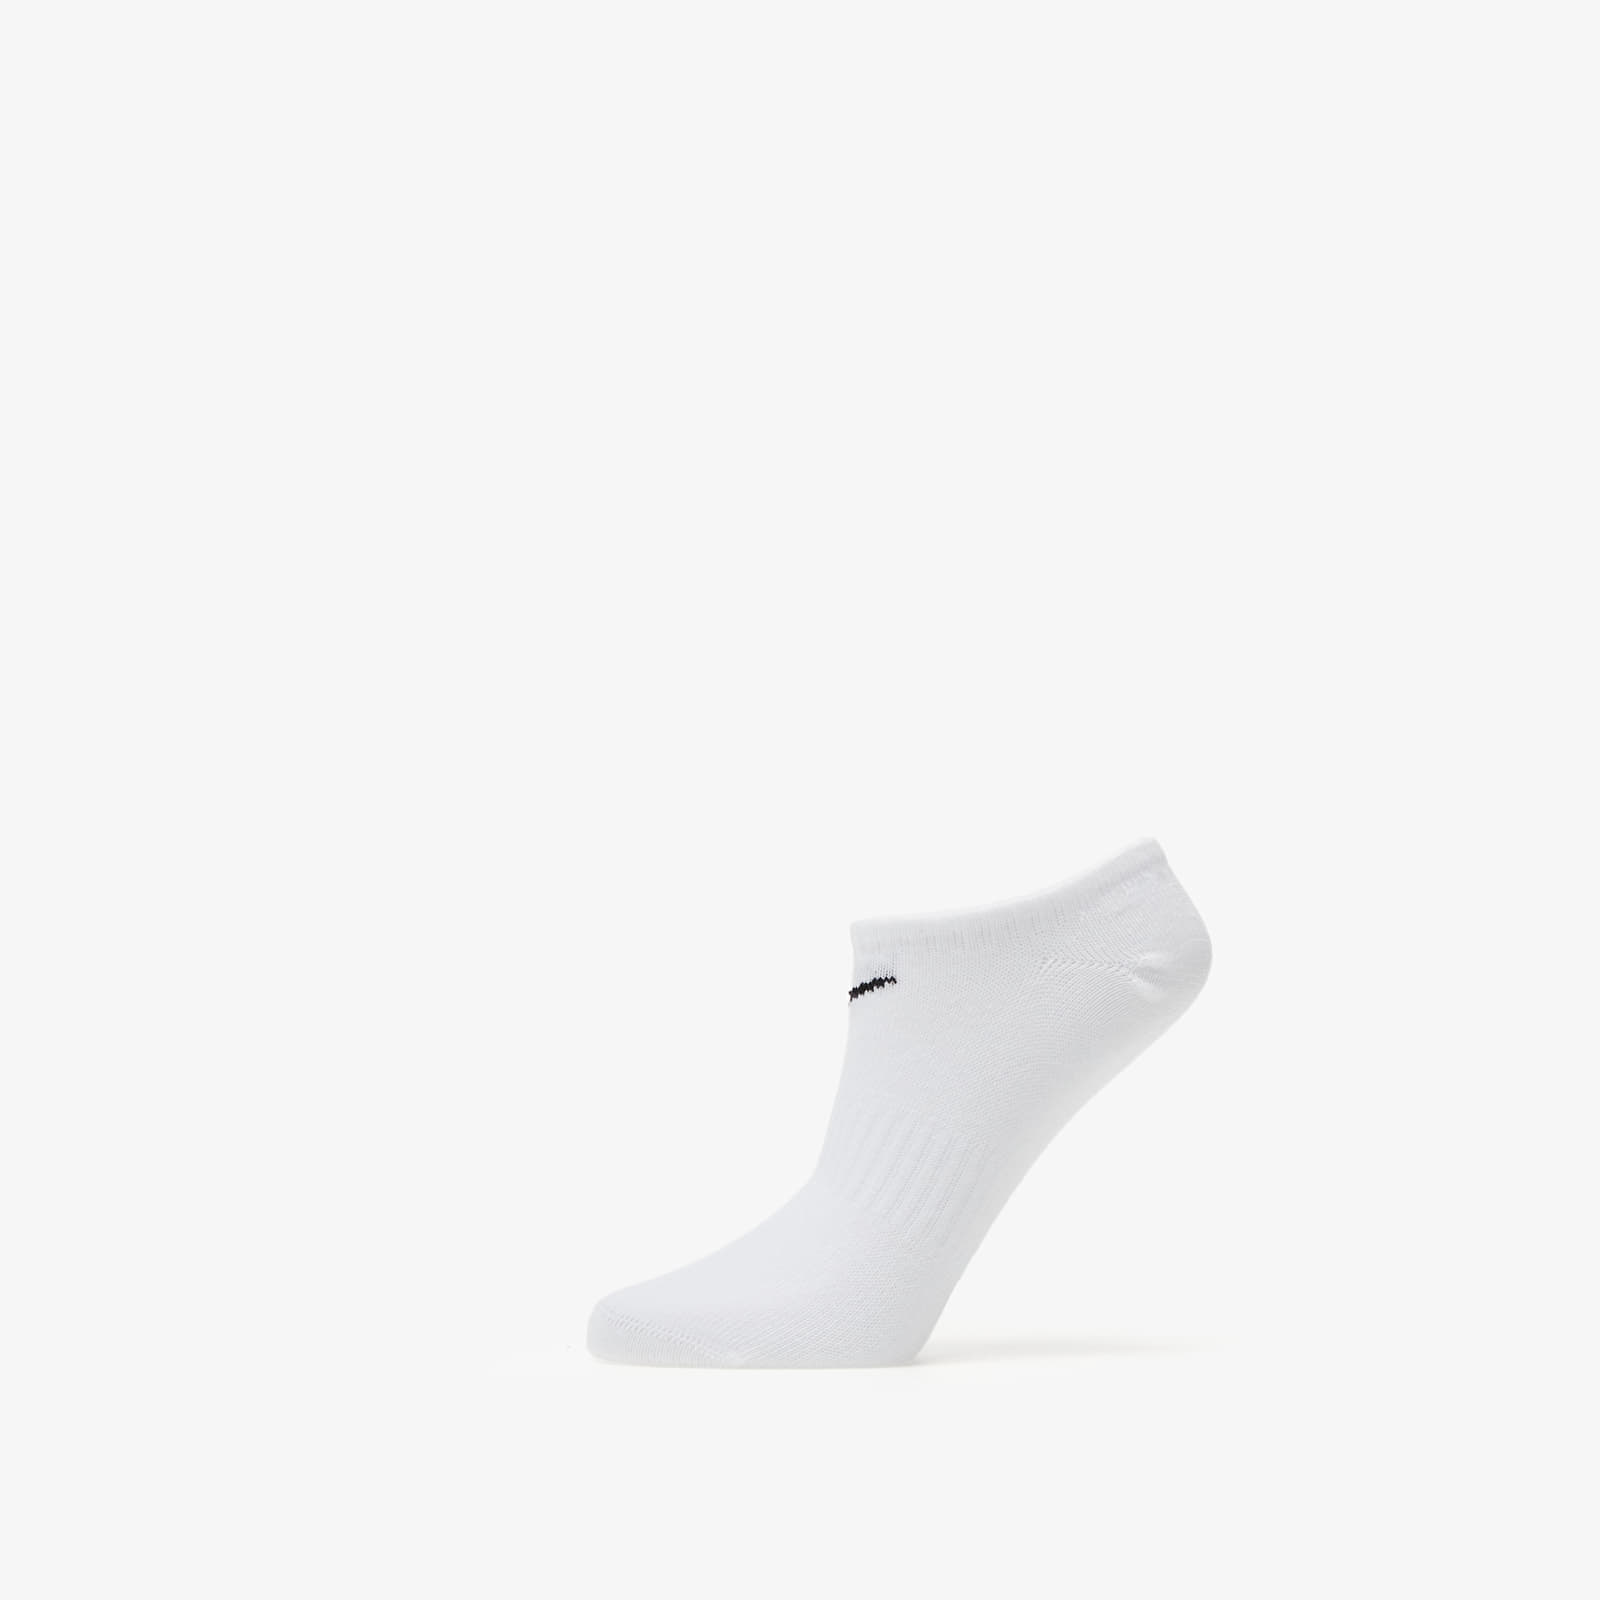 Socks Nike Everyday Cotton Lightweight No Show Socks 3-Pack White